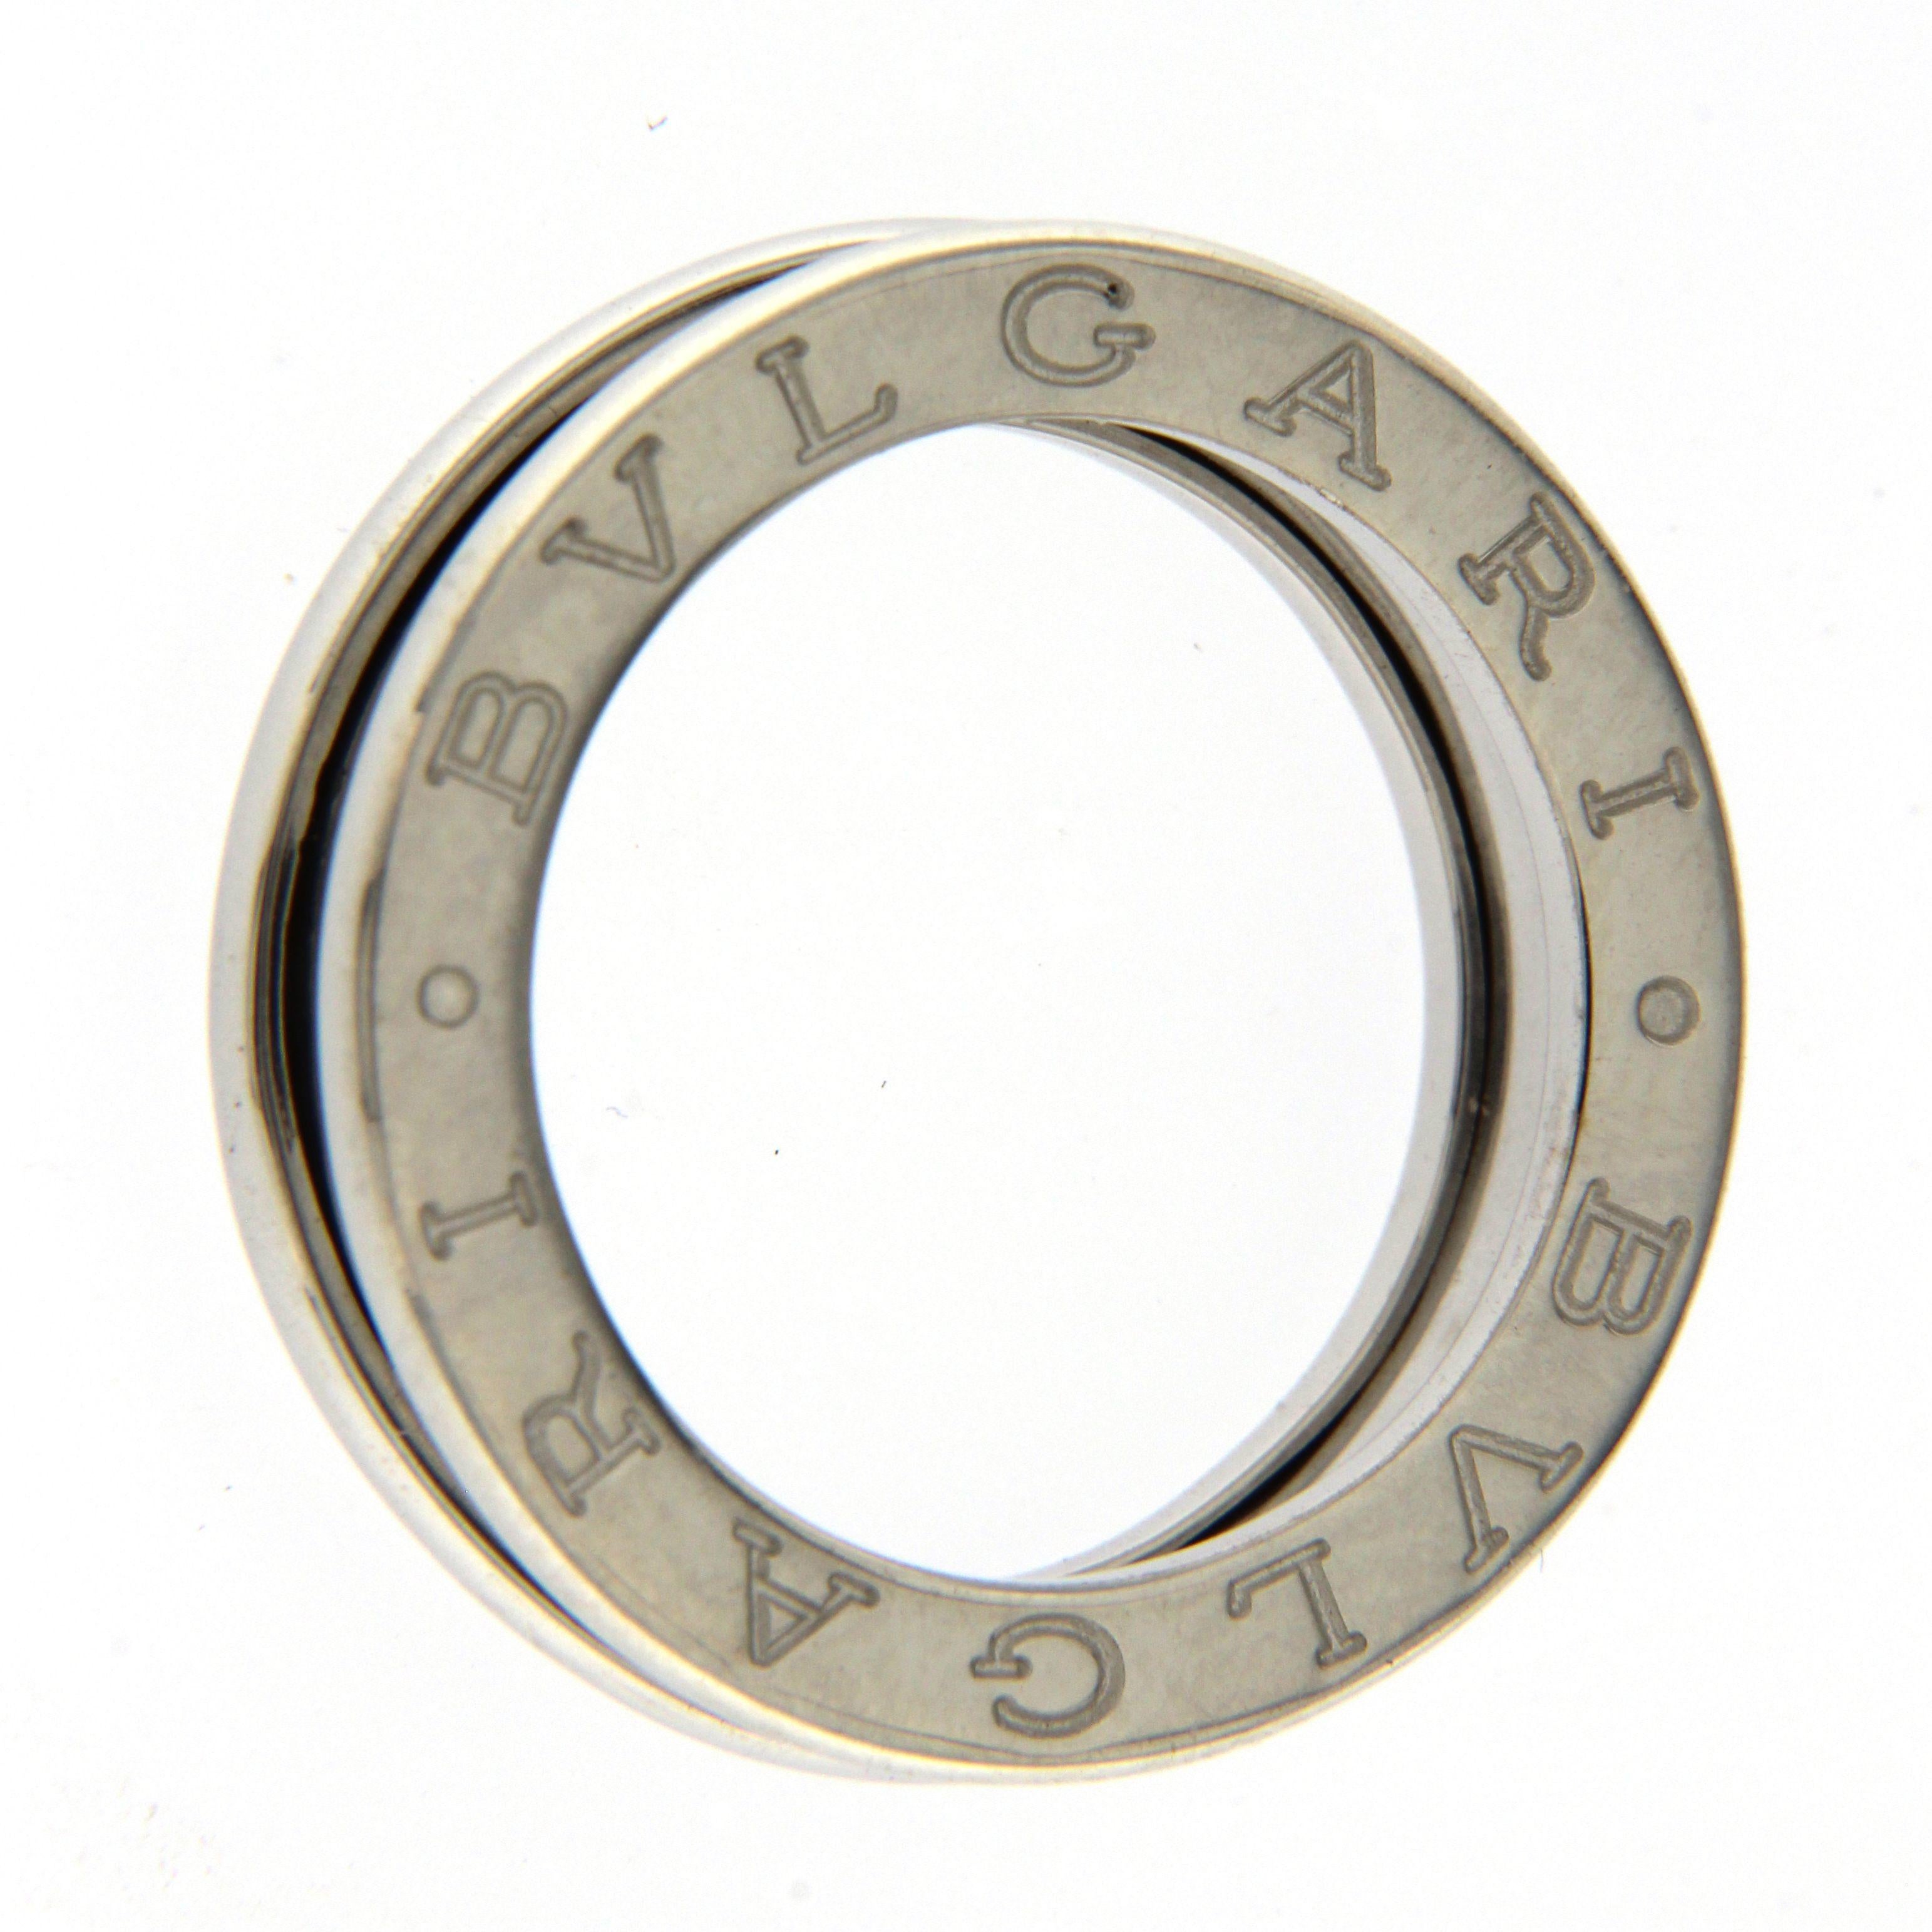 BZERO1 ring 18kt white gold       size 49        1 Band